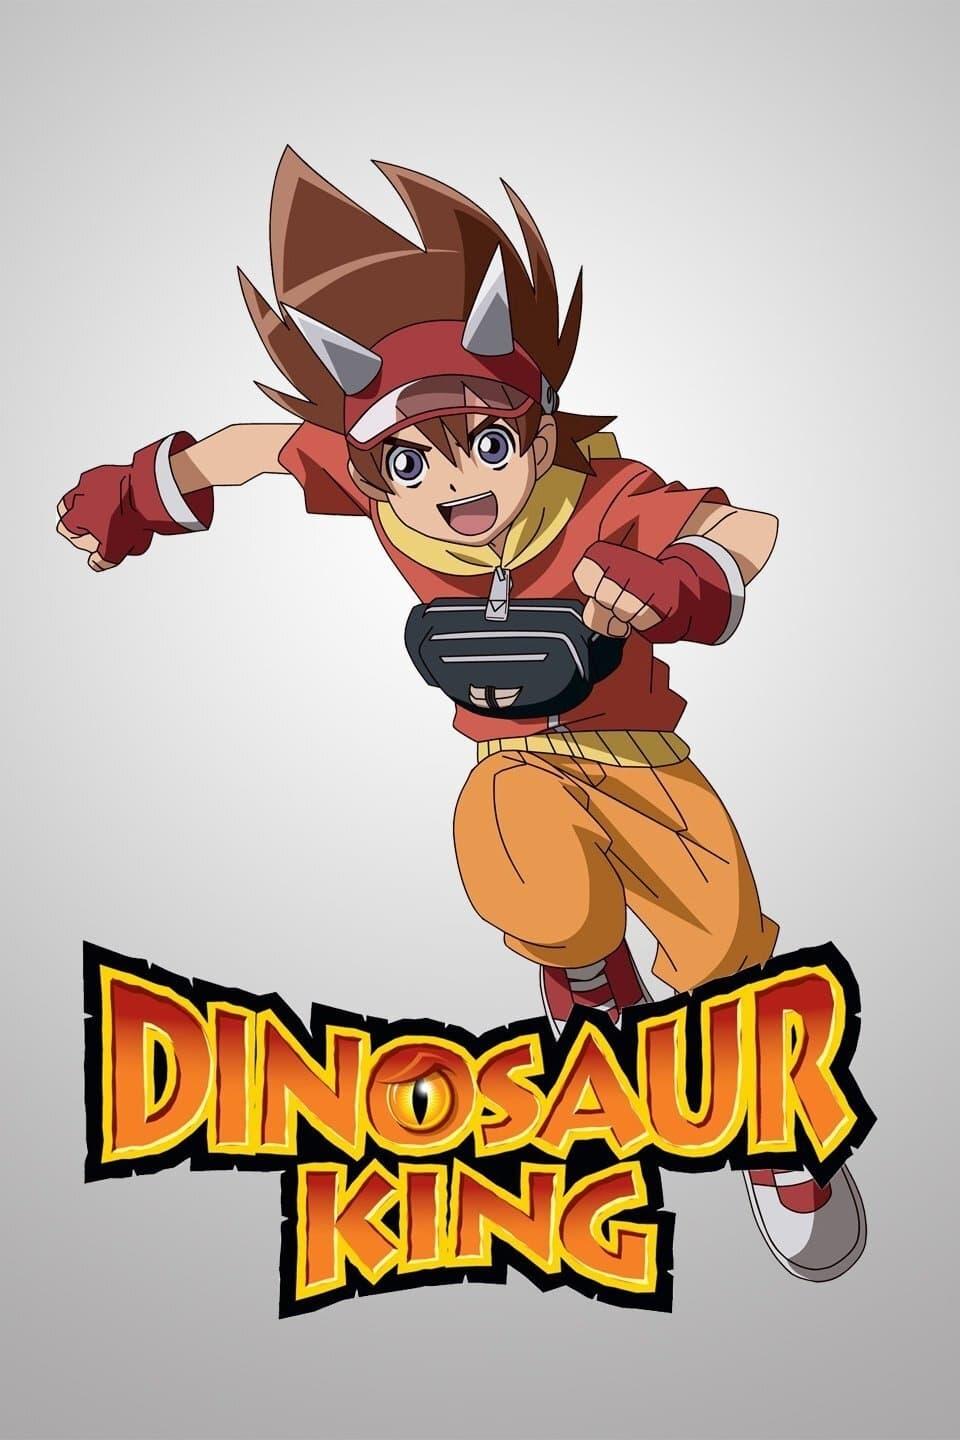 Dinosaur King poster